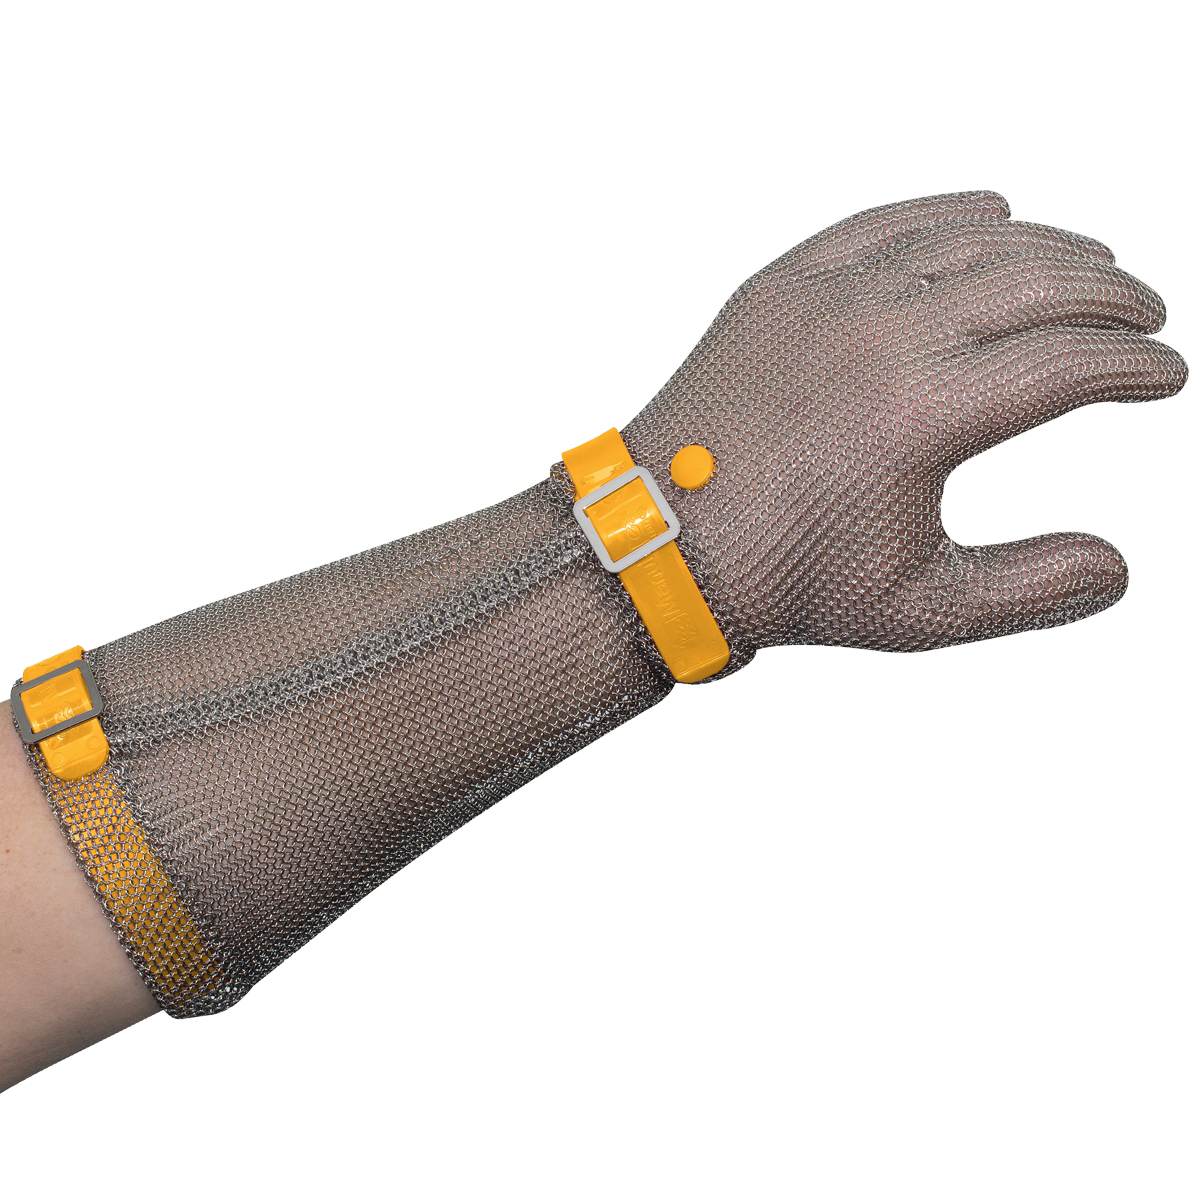 Manulatex Chain Mesh Glove, Long Cuff With Strap